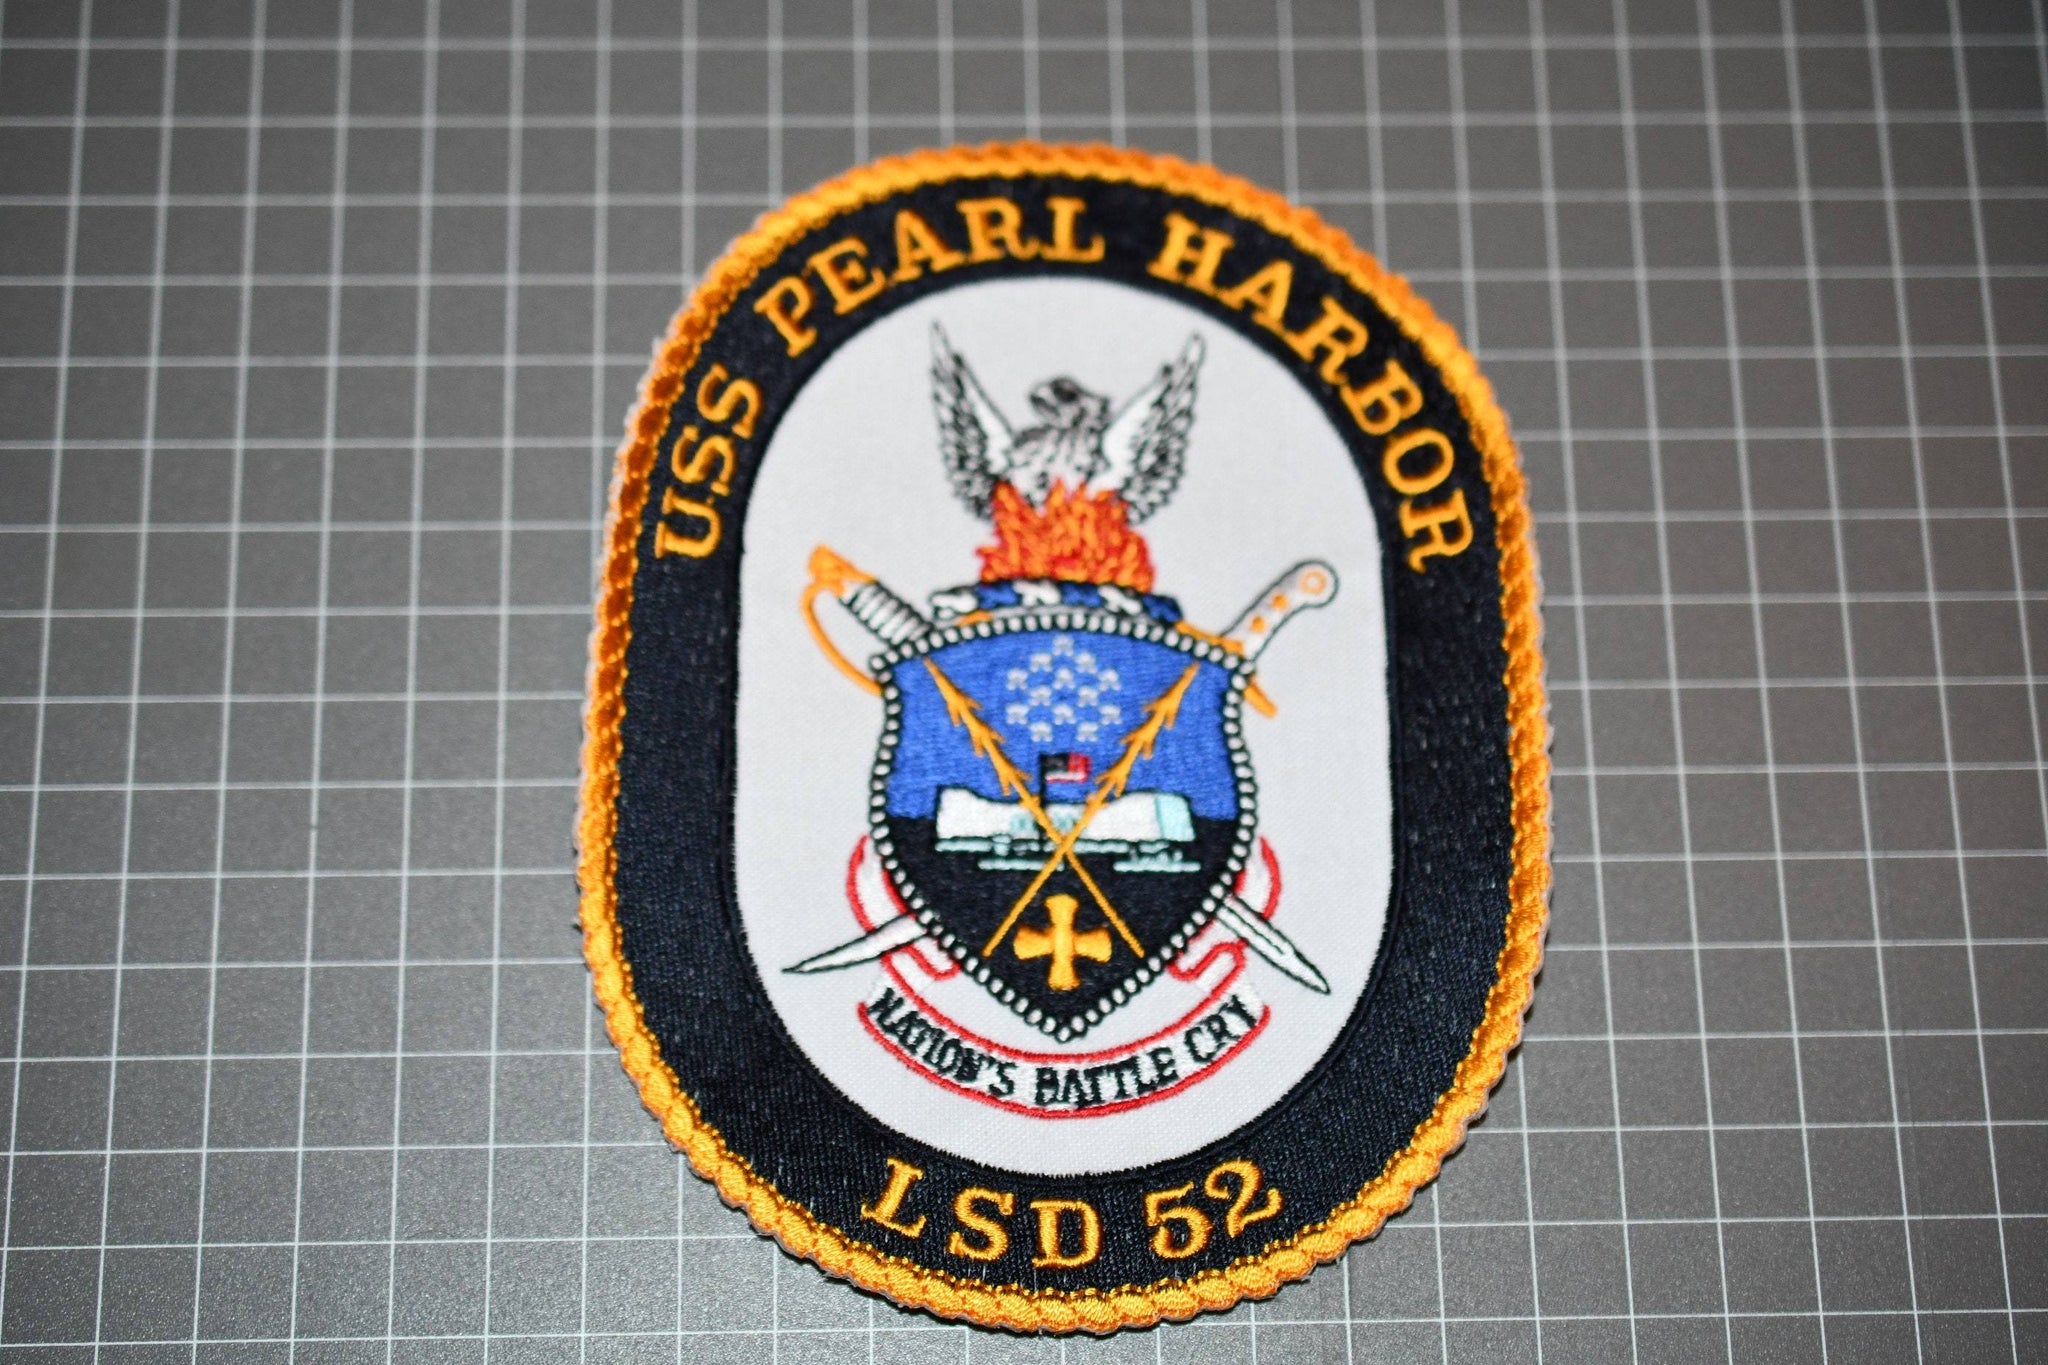 USN USS Pearl Harbor LSD 52 Patch (B10-079)